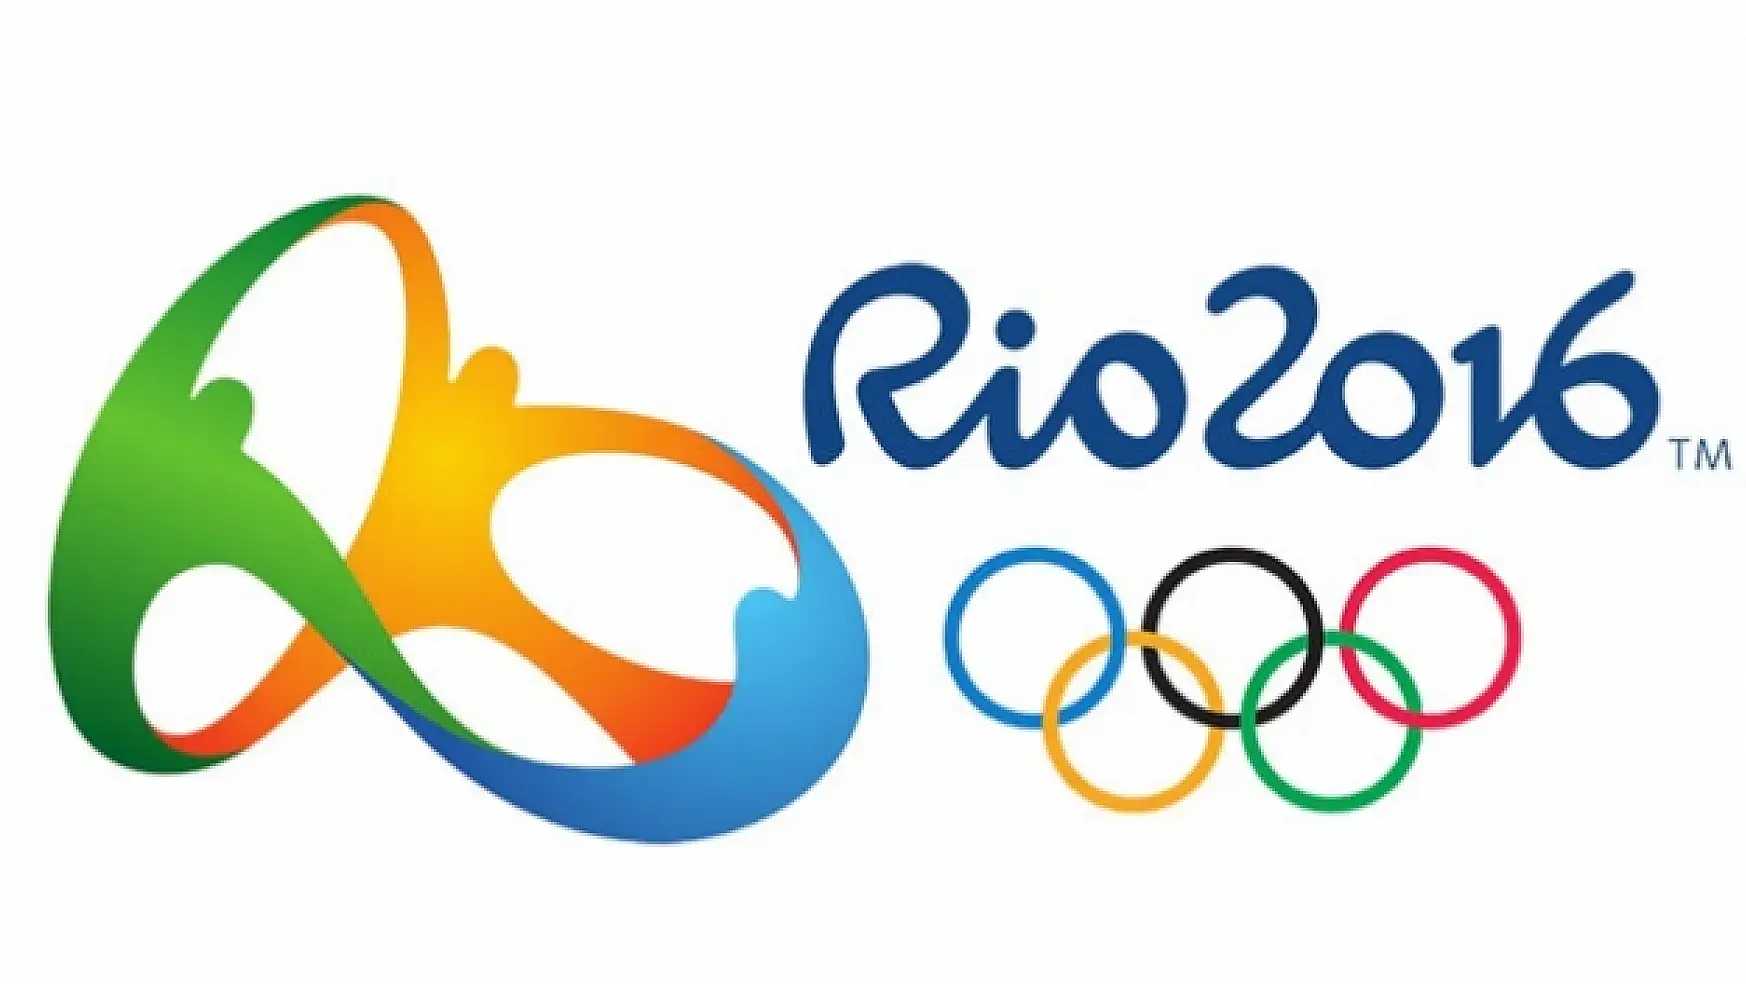 109 milli sporcu Rio 2016 yolunda